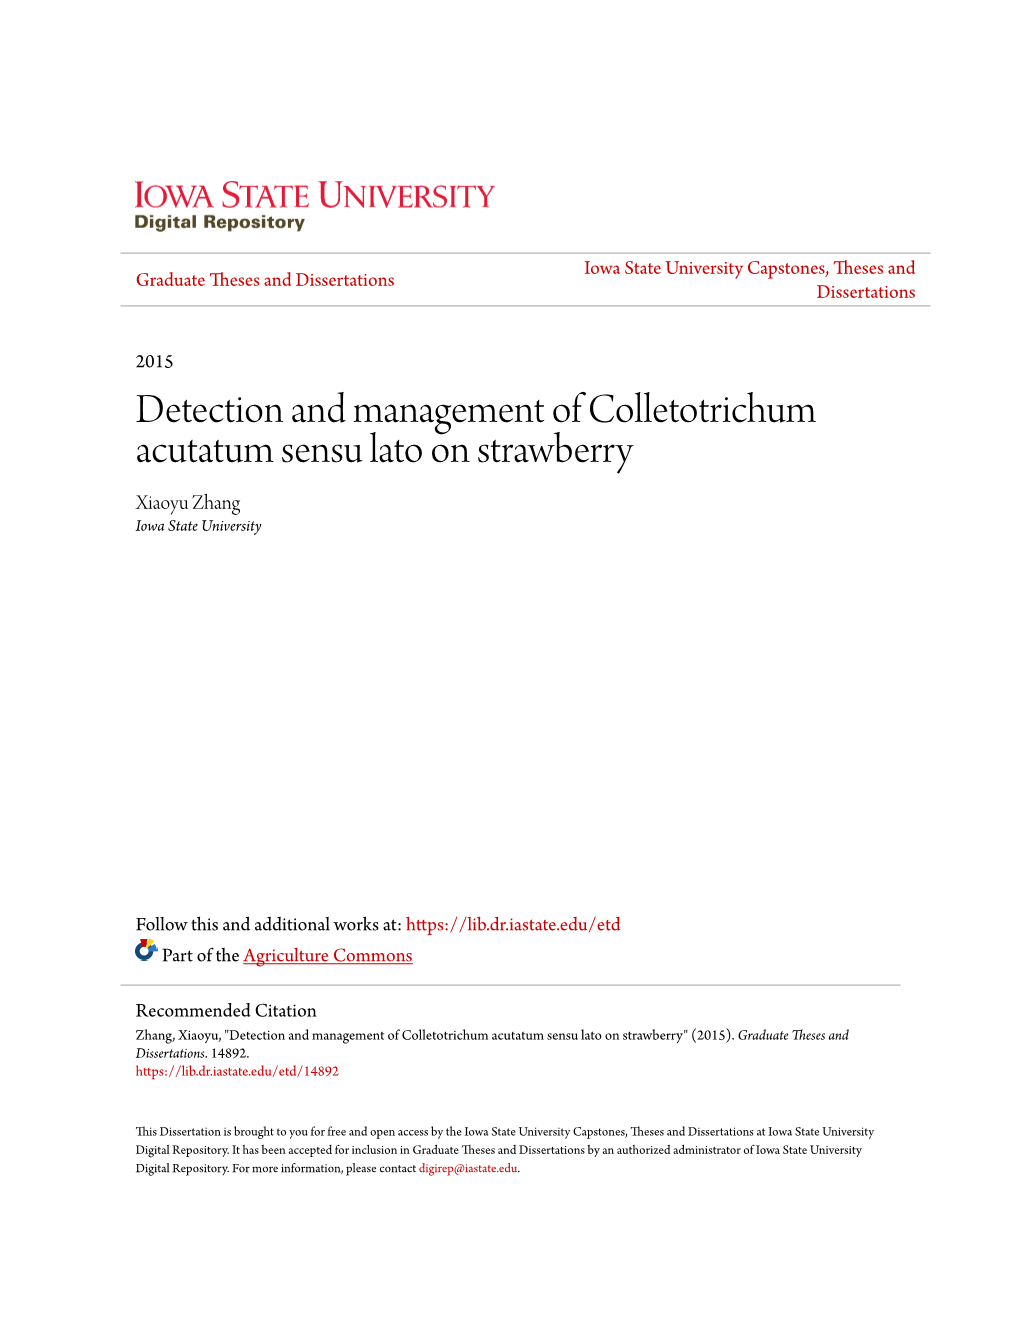 Detection and Management of Colletotrichum Acutatum Sensu Lato on Strawberry Xiaoyu Zhang Iowa State University